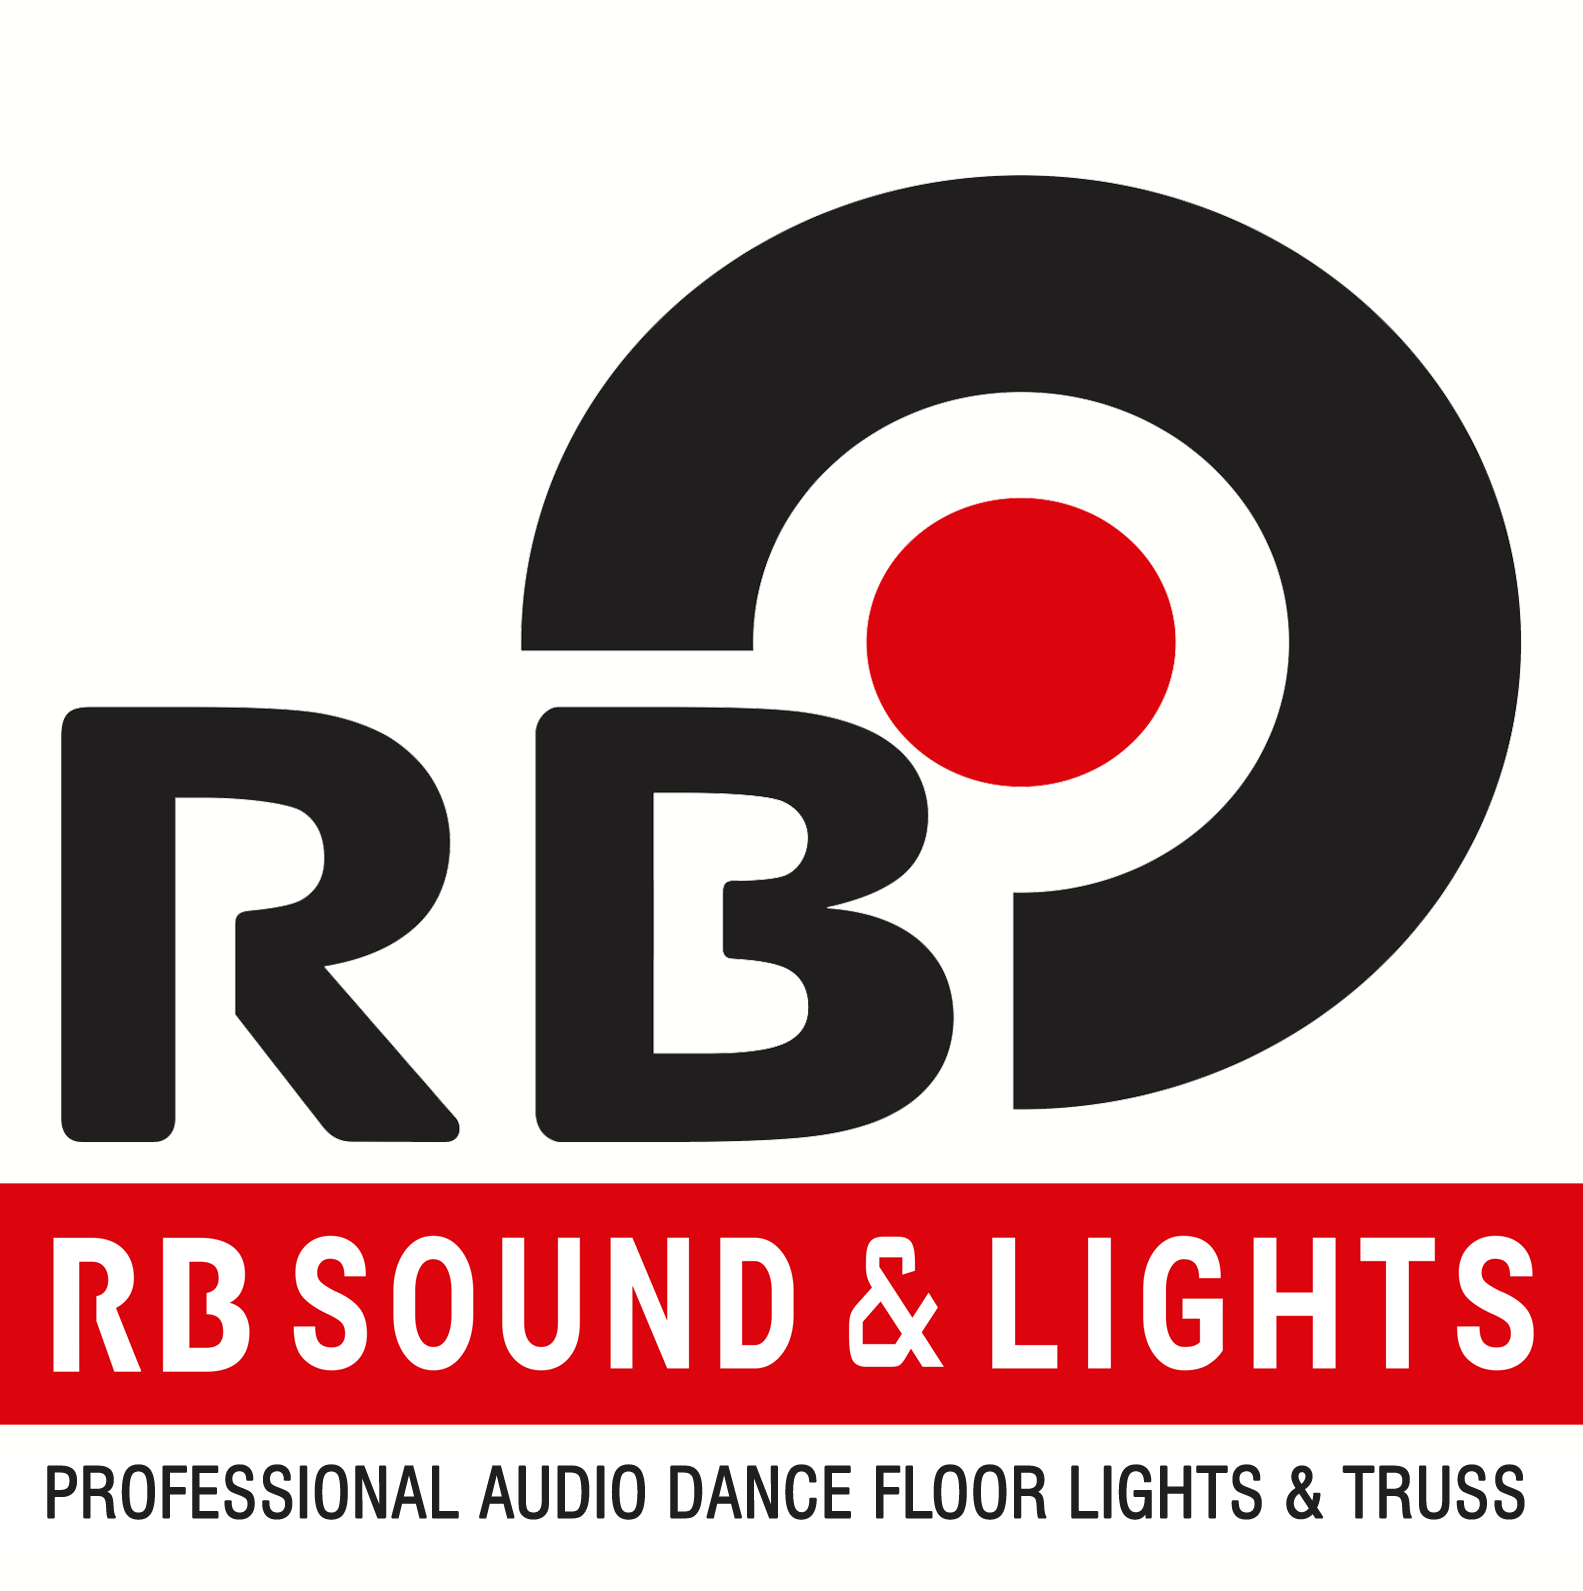 Circle R B Logo - RB sound lights